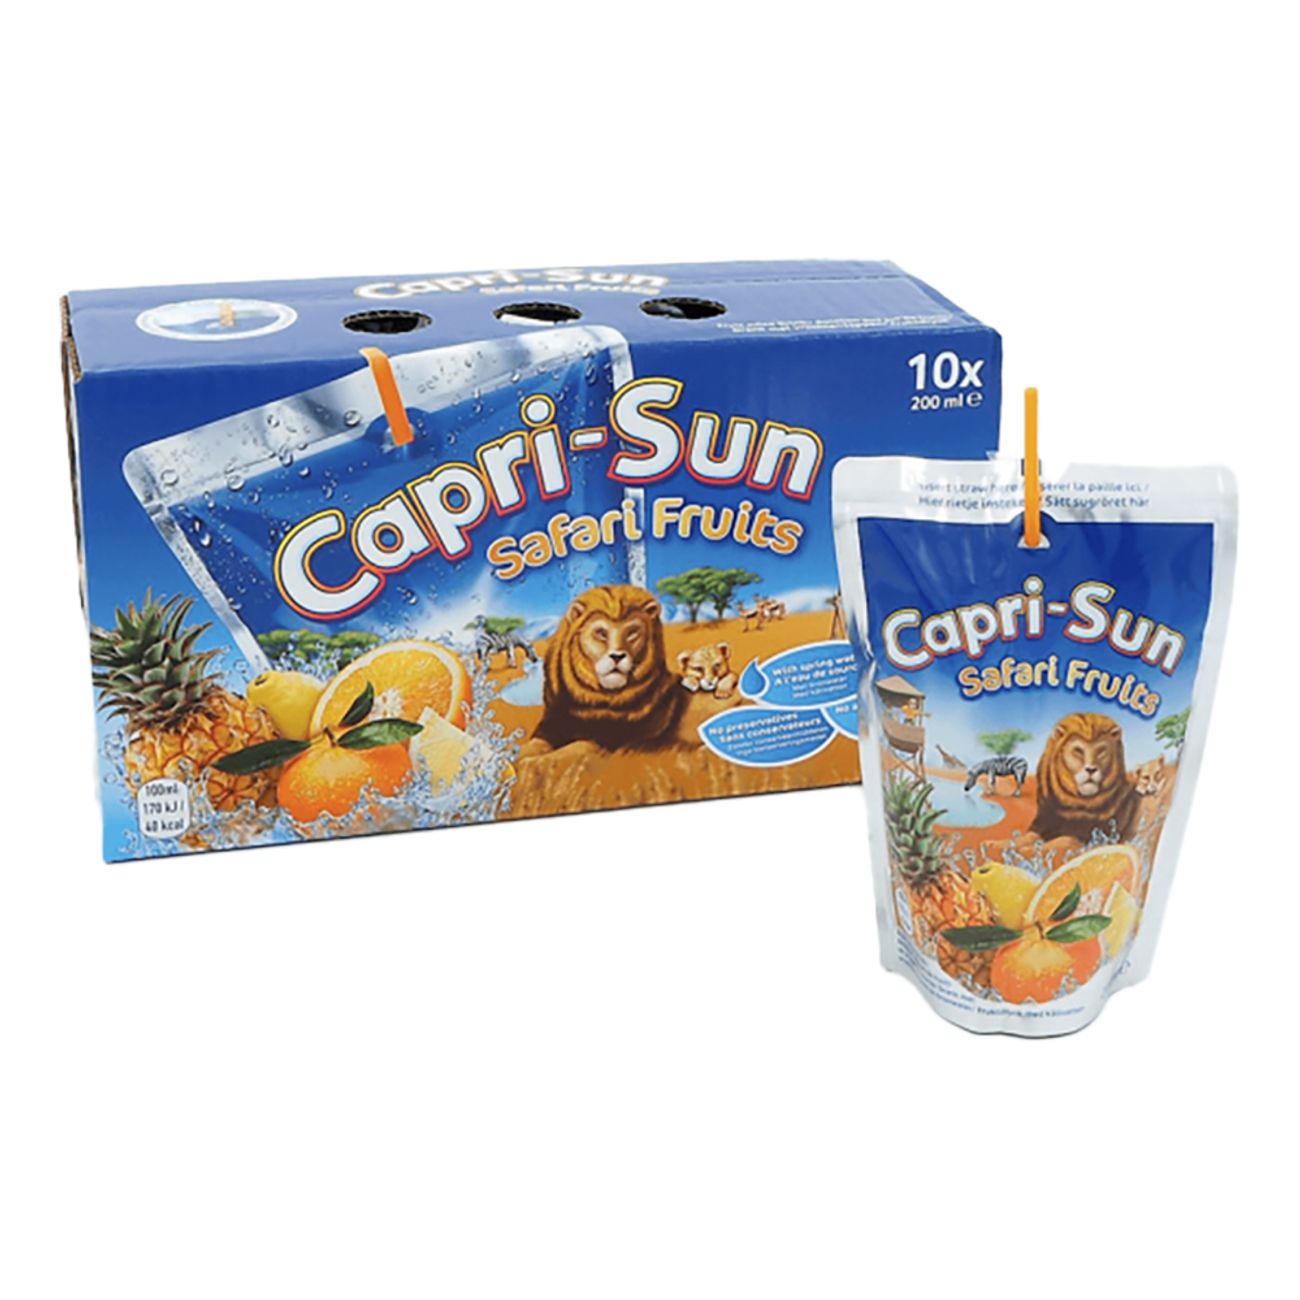 capri-sun-safari-fruit-72296-2